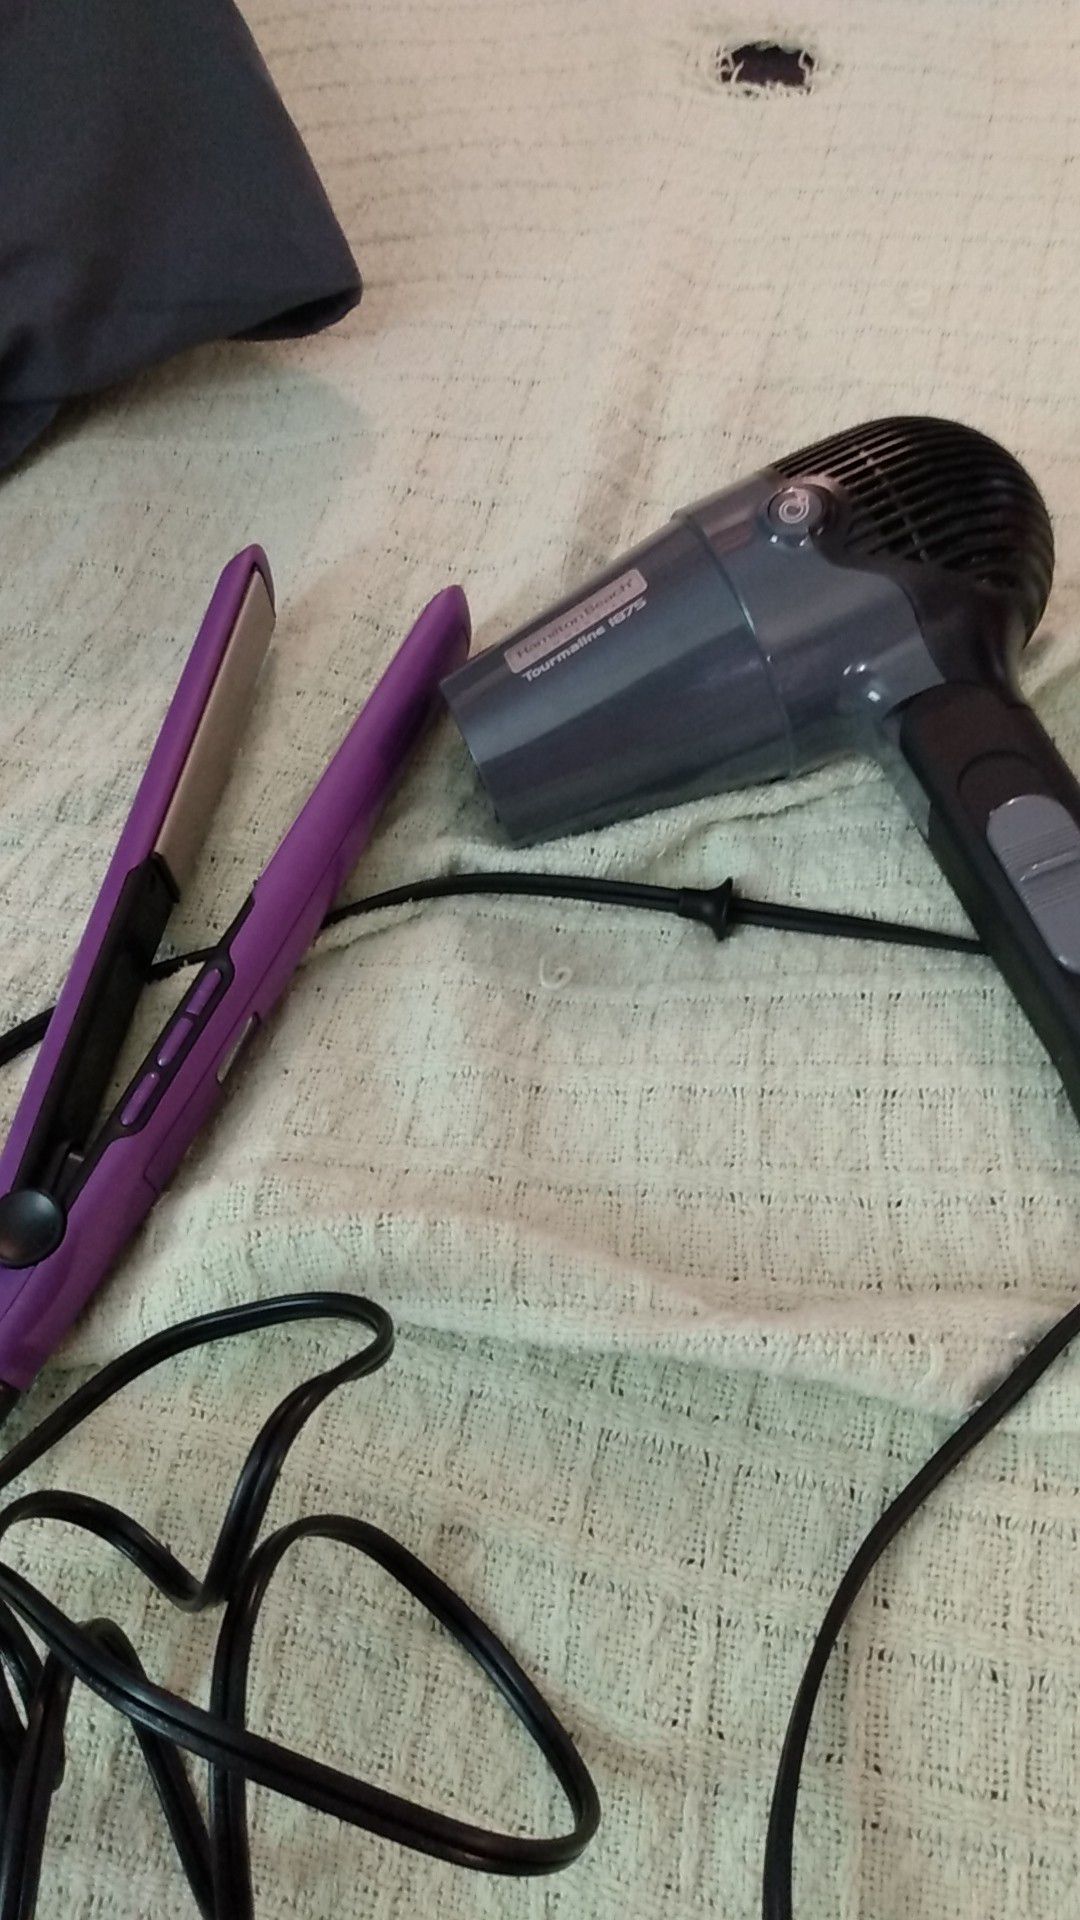 Remington straight iron and Hamilton Beach commerical hair dryer